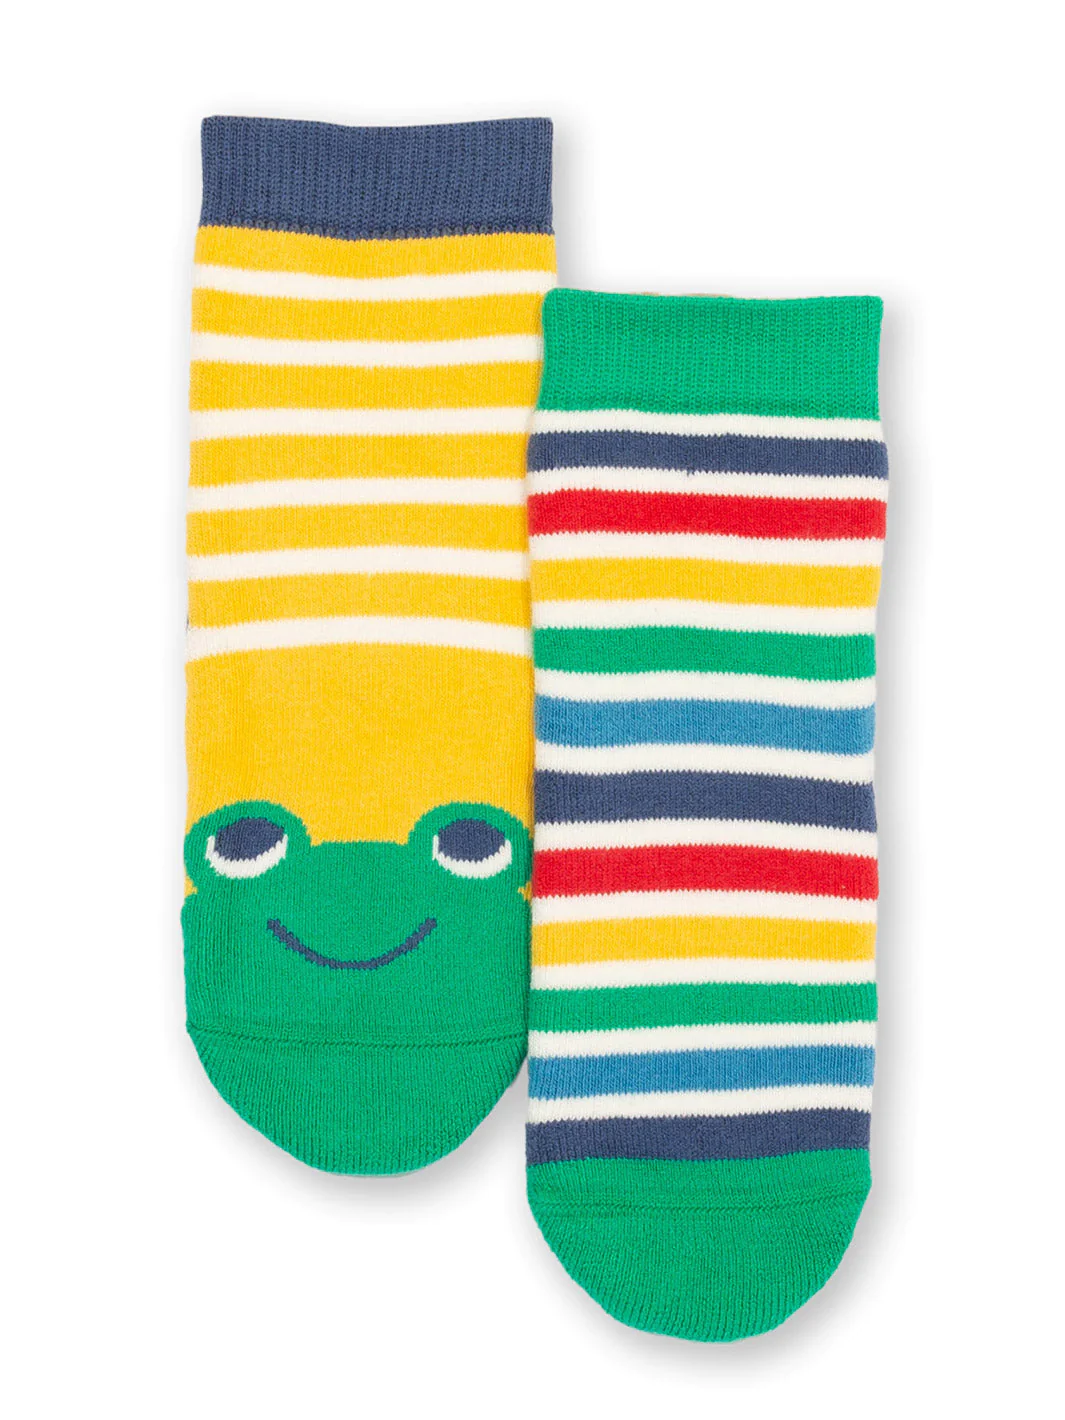 Frog Face Socks by Kite